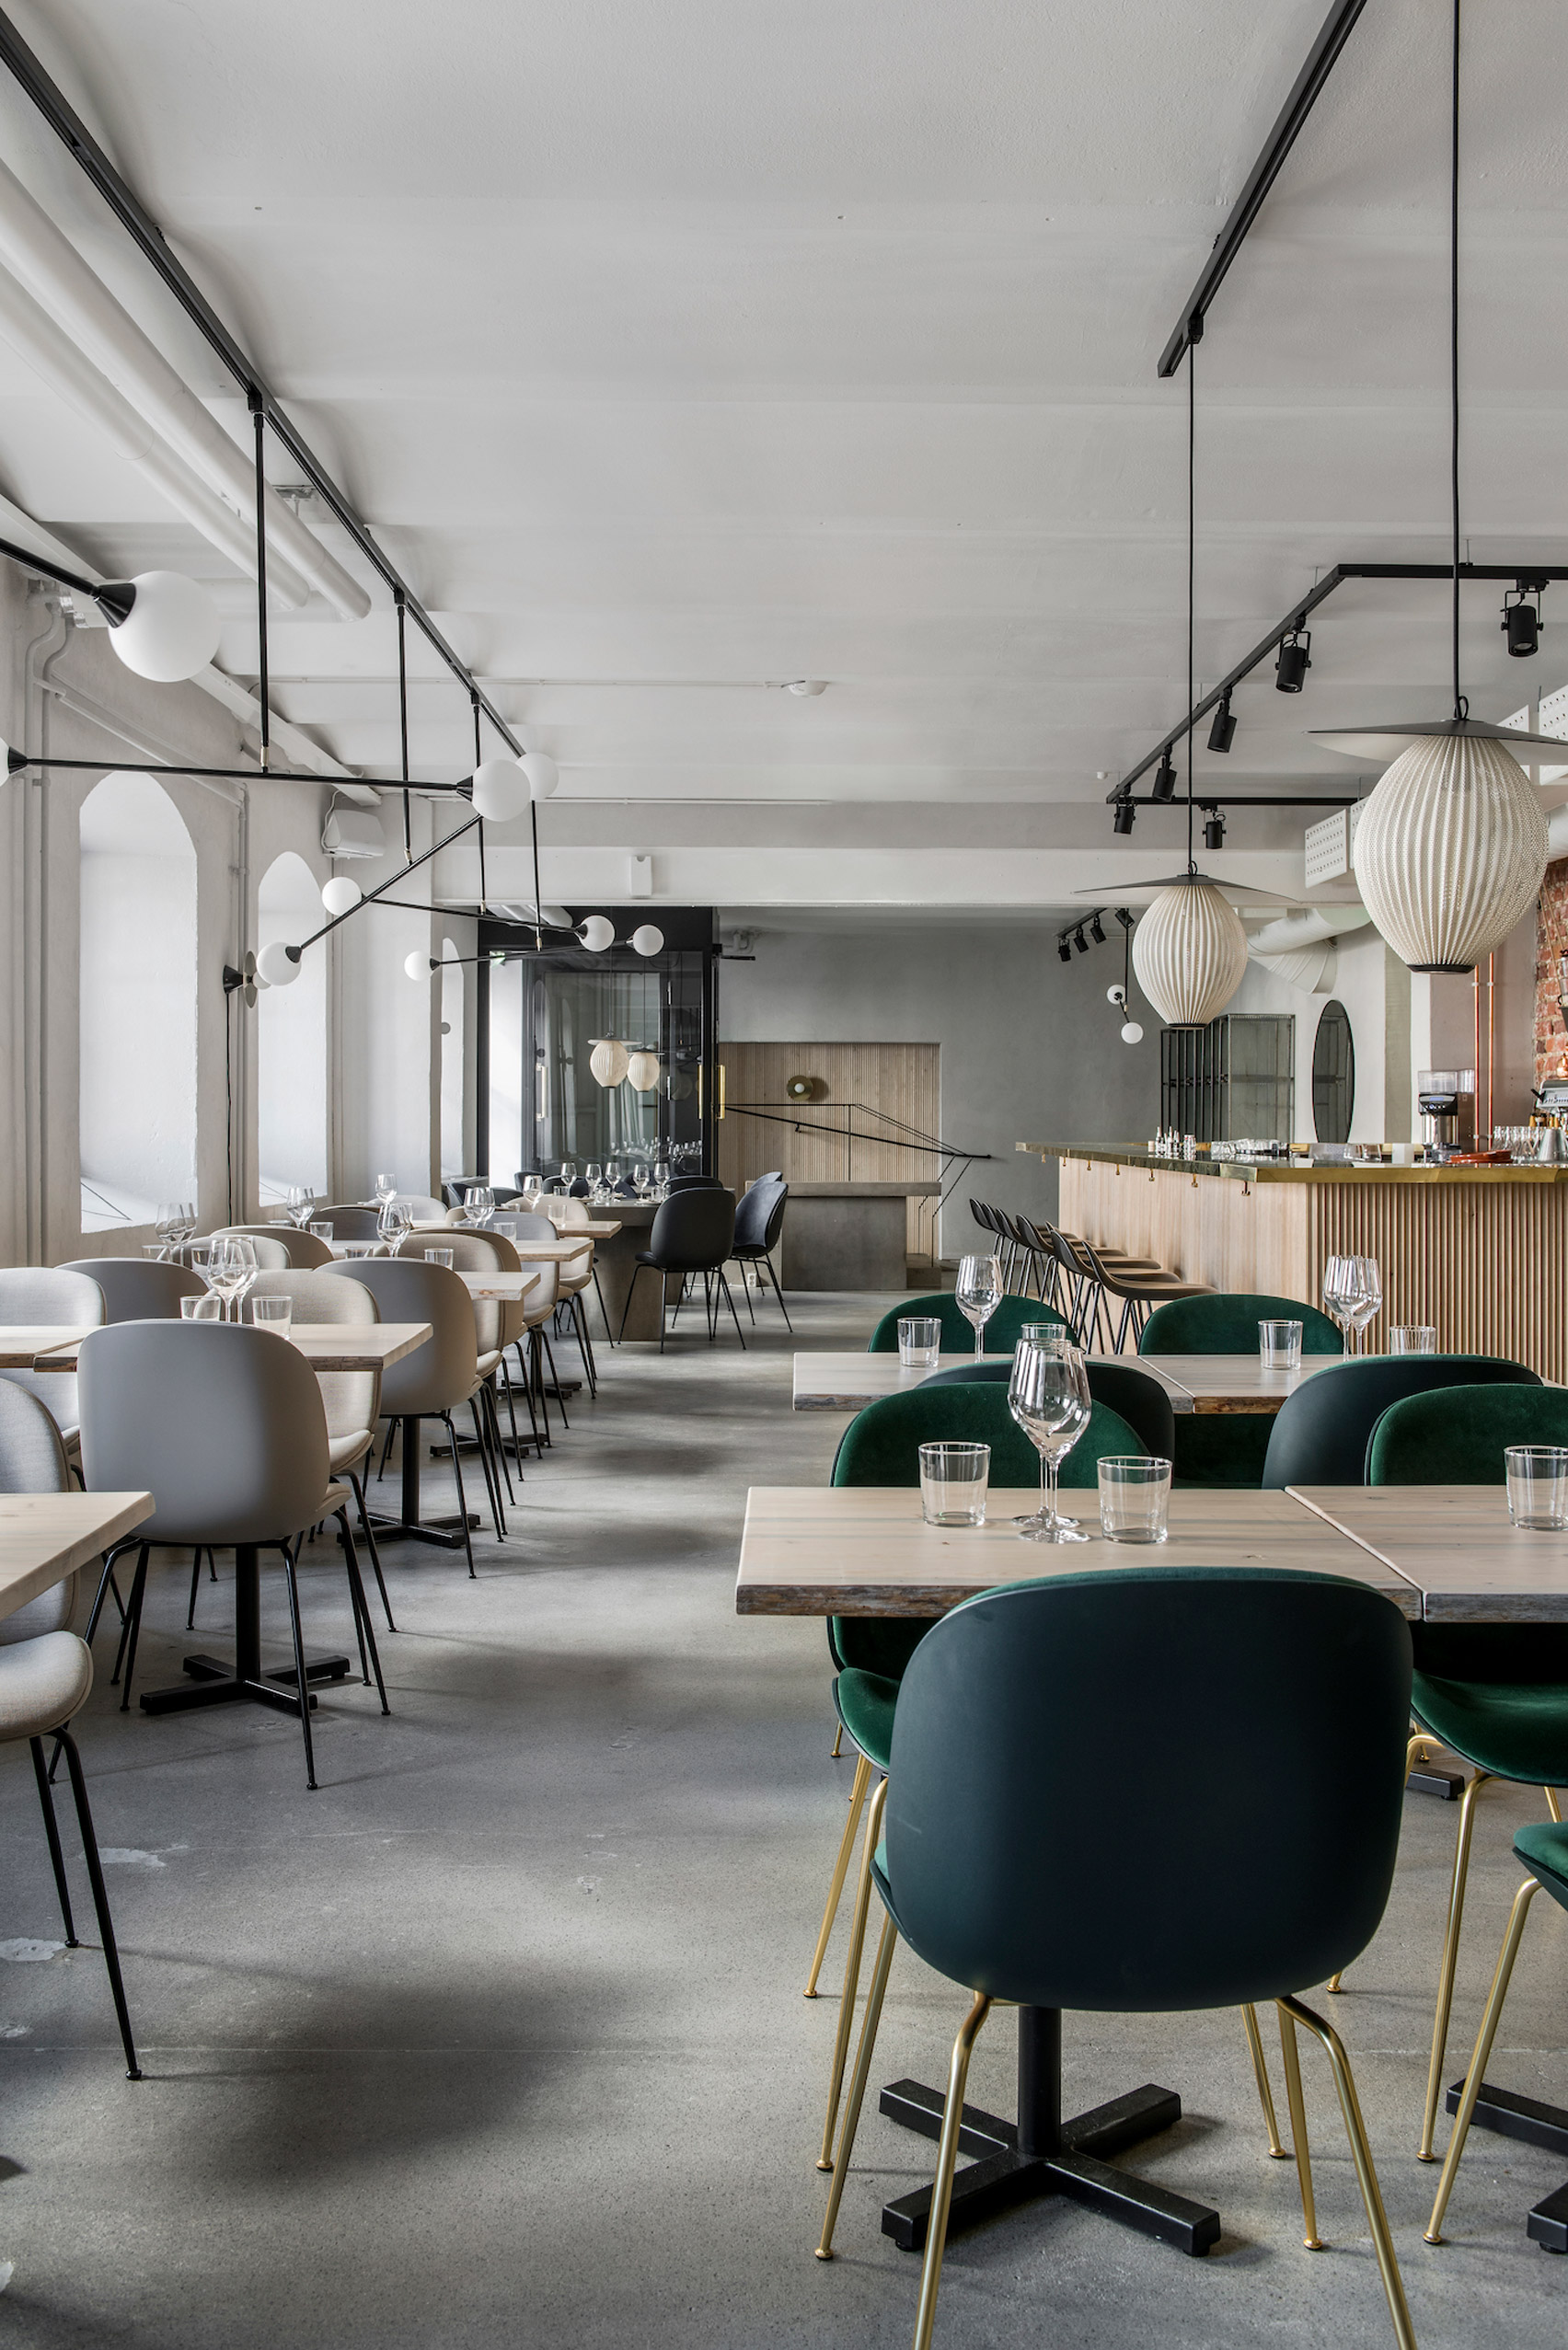 Maannos kitchen and bar by Laura Seppänen Design Agency